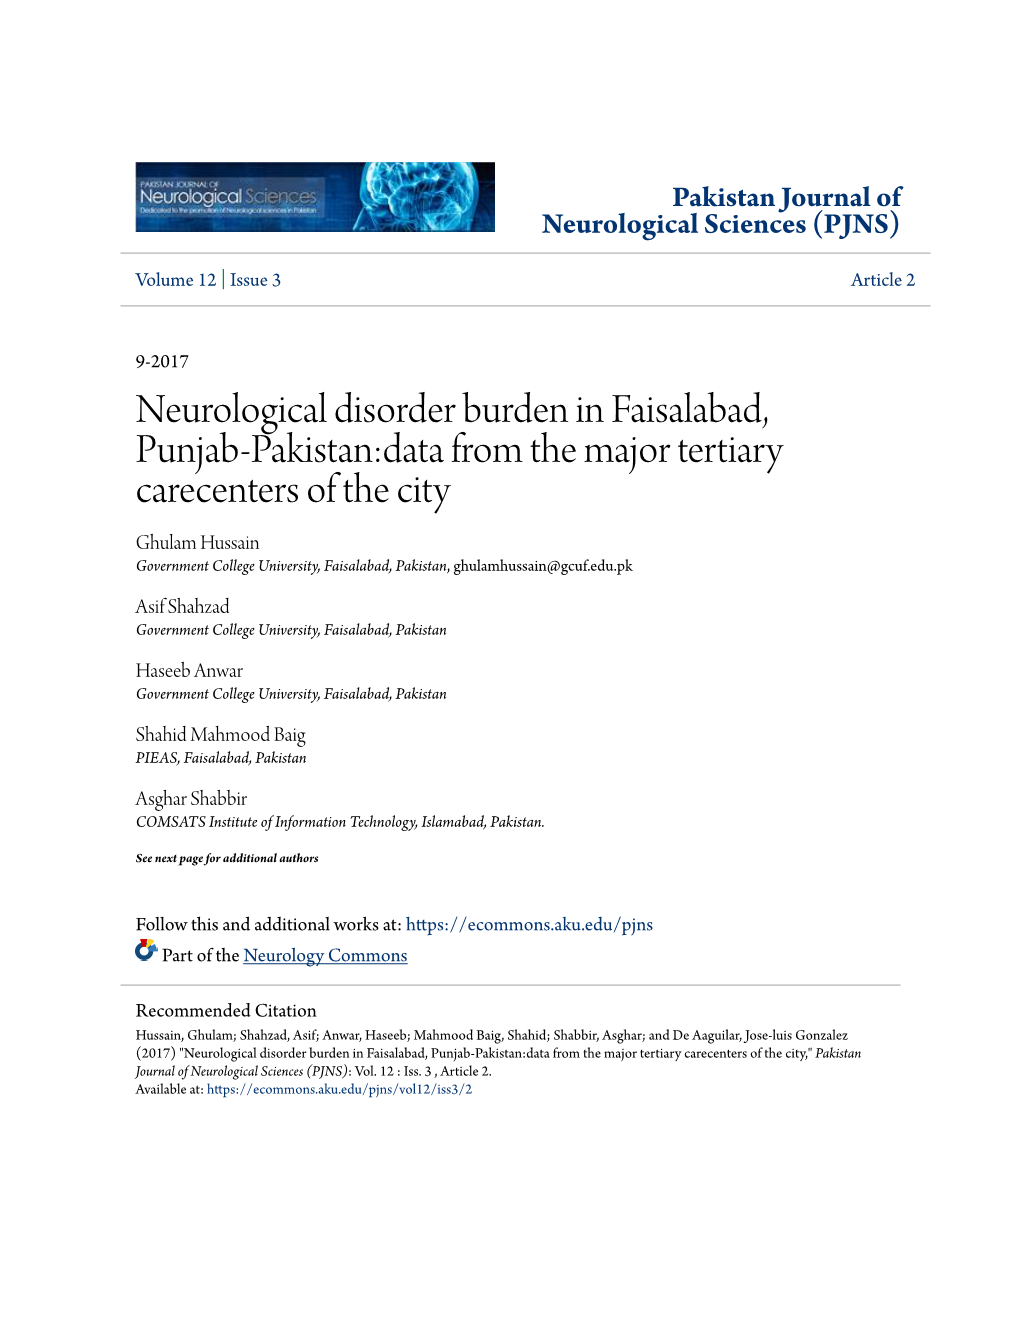 Neurological Disorder Burden in Faisalabad, Punjab-Pakistan:Data